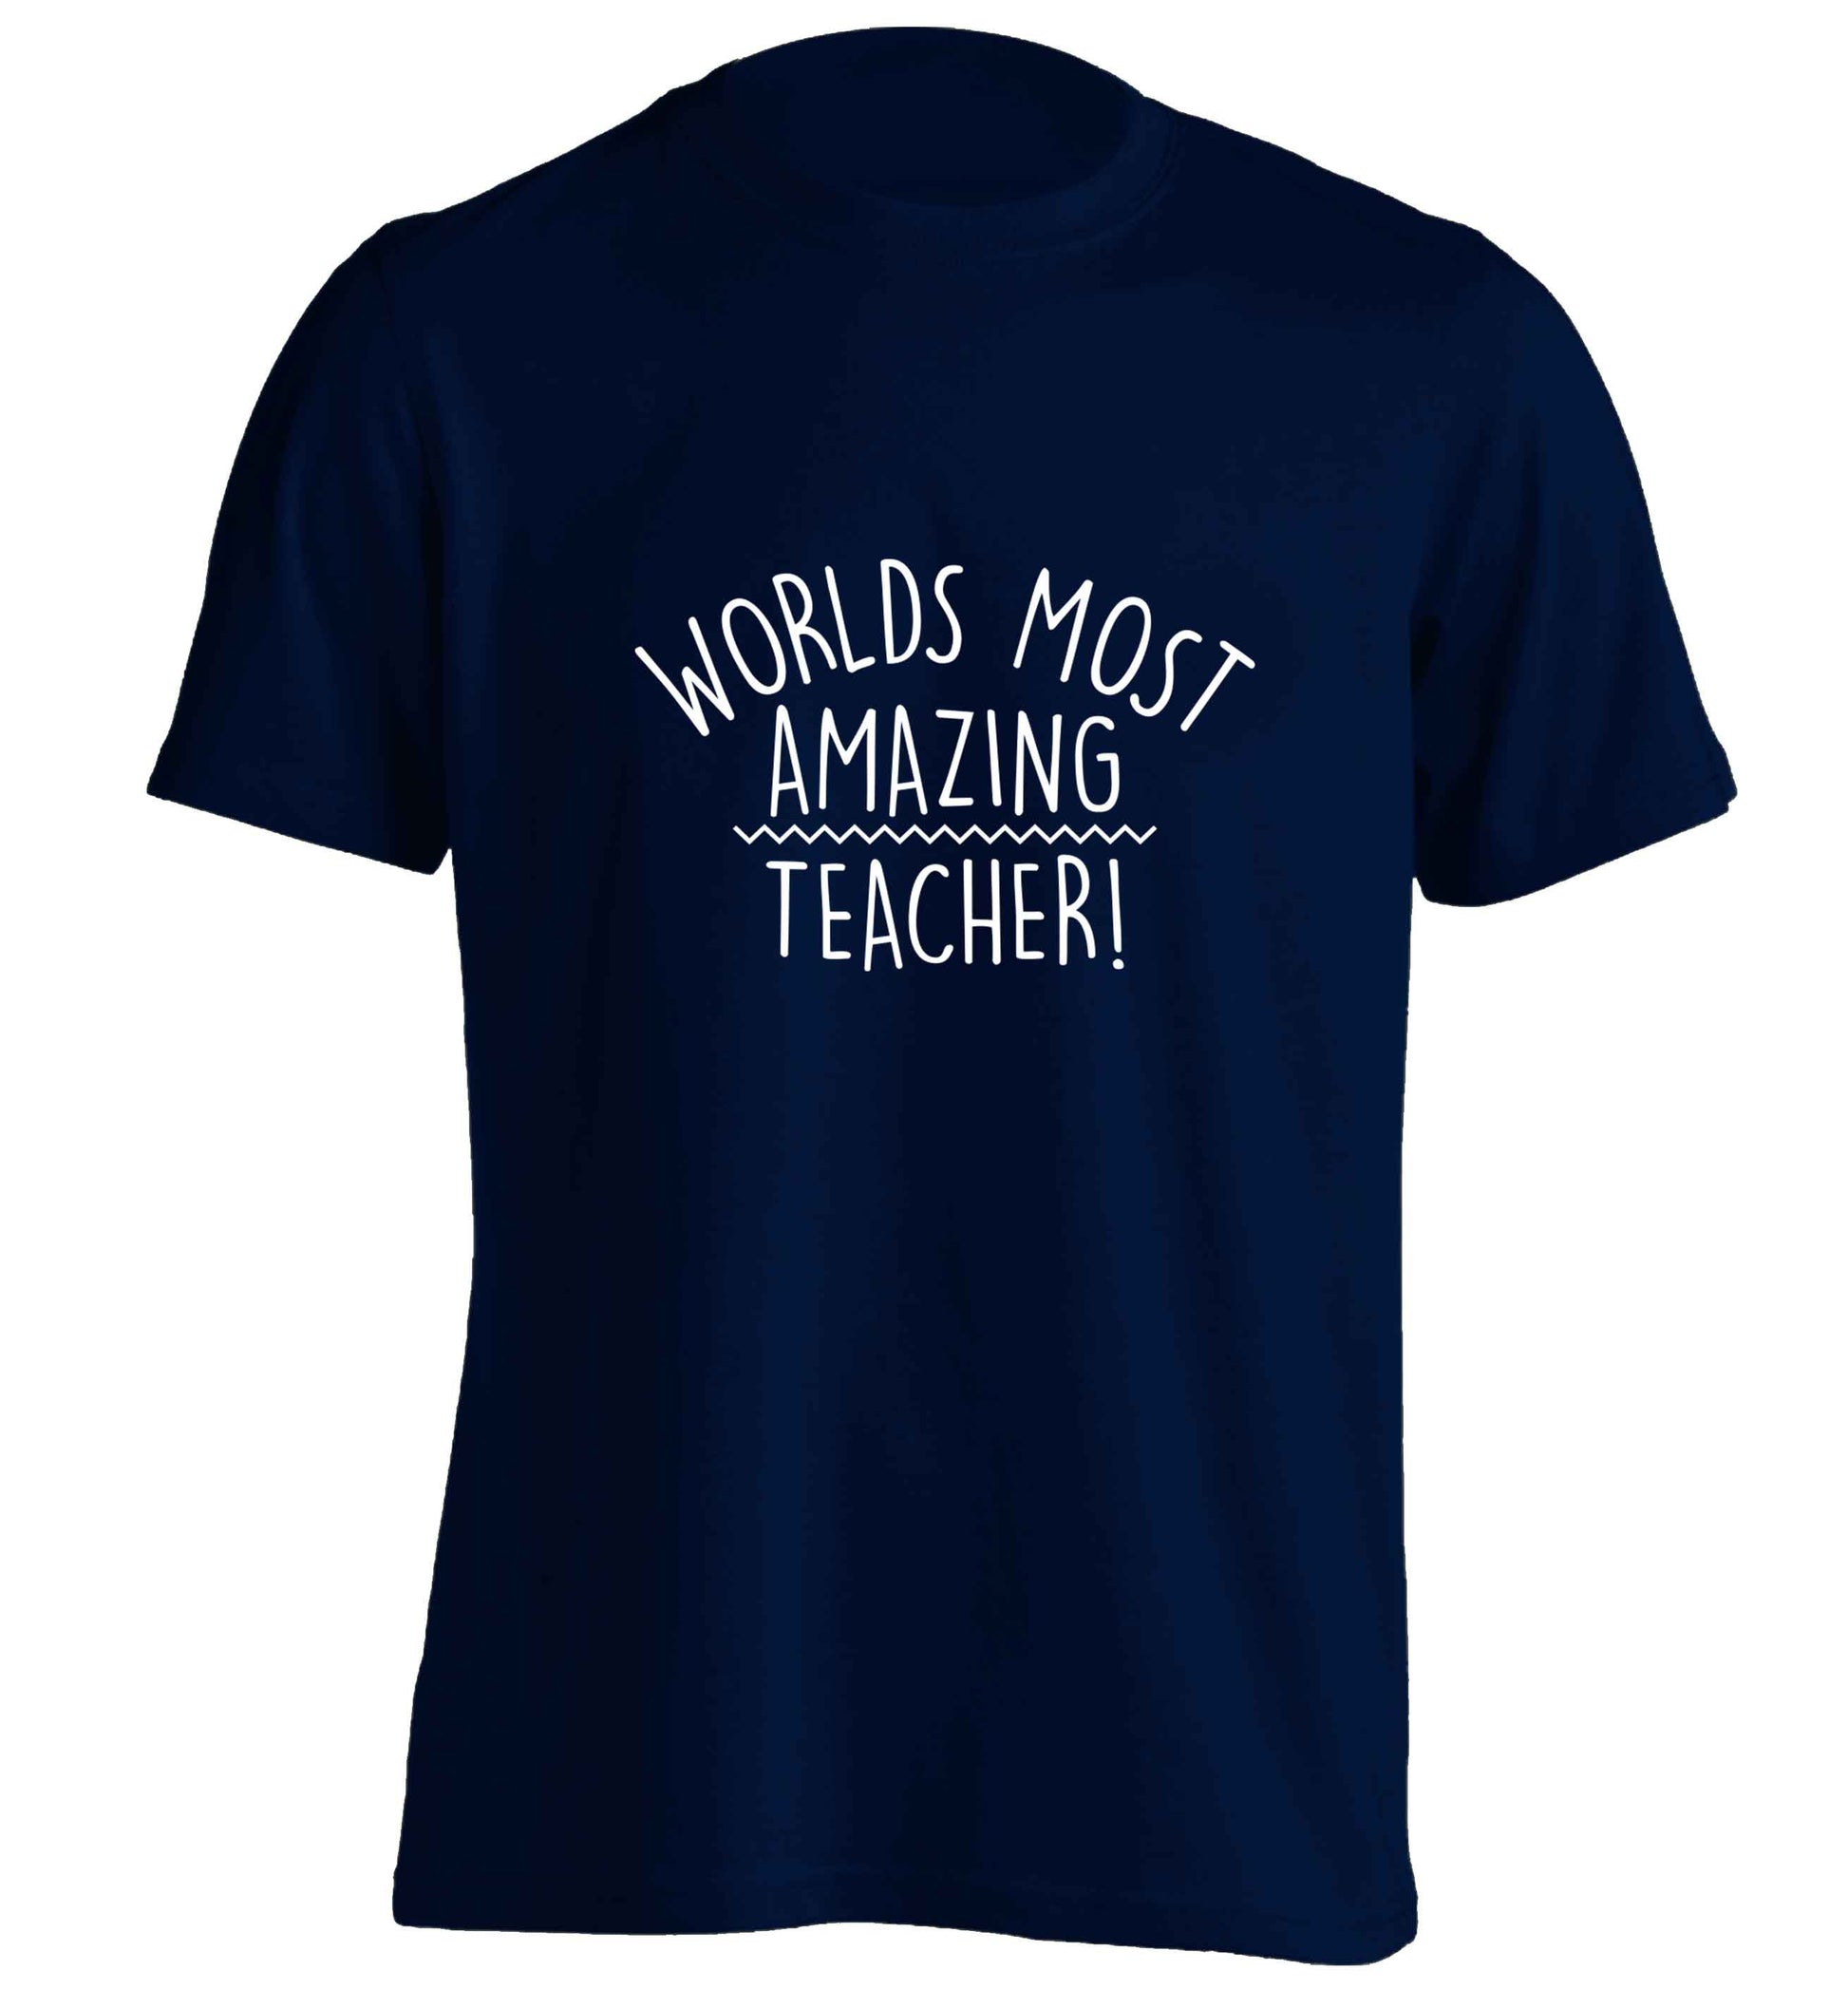 Worlds most amazing teacher adults unisex navy Tshirt 2XL